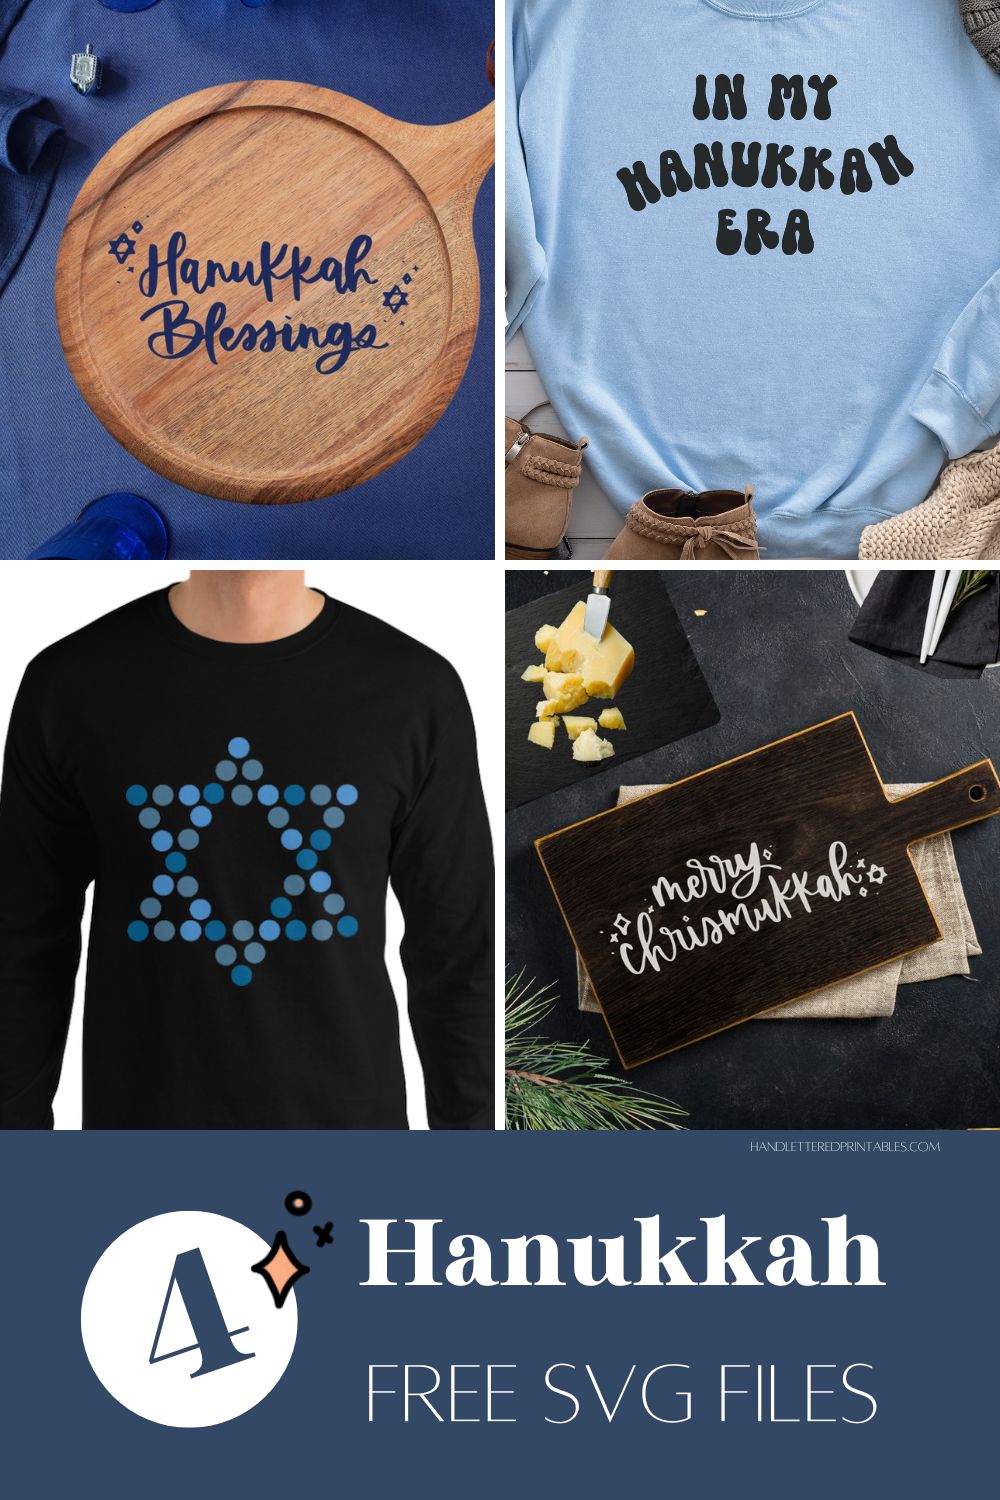 Free Hanukkah themed SVG files!